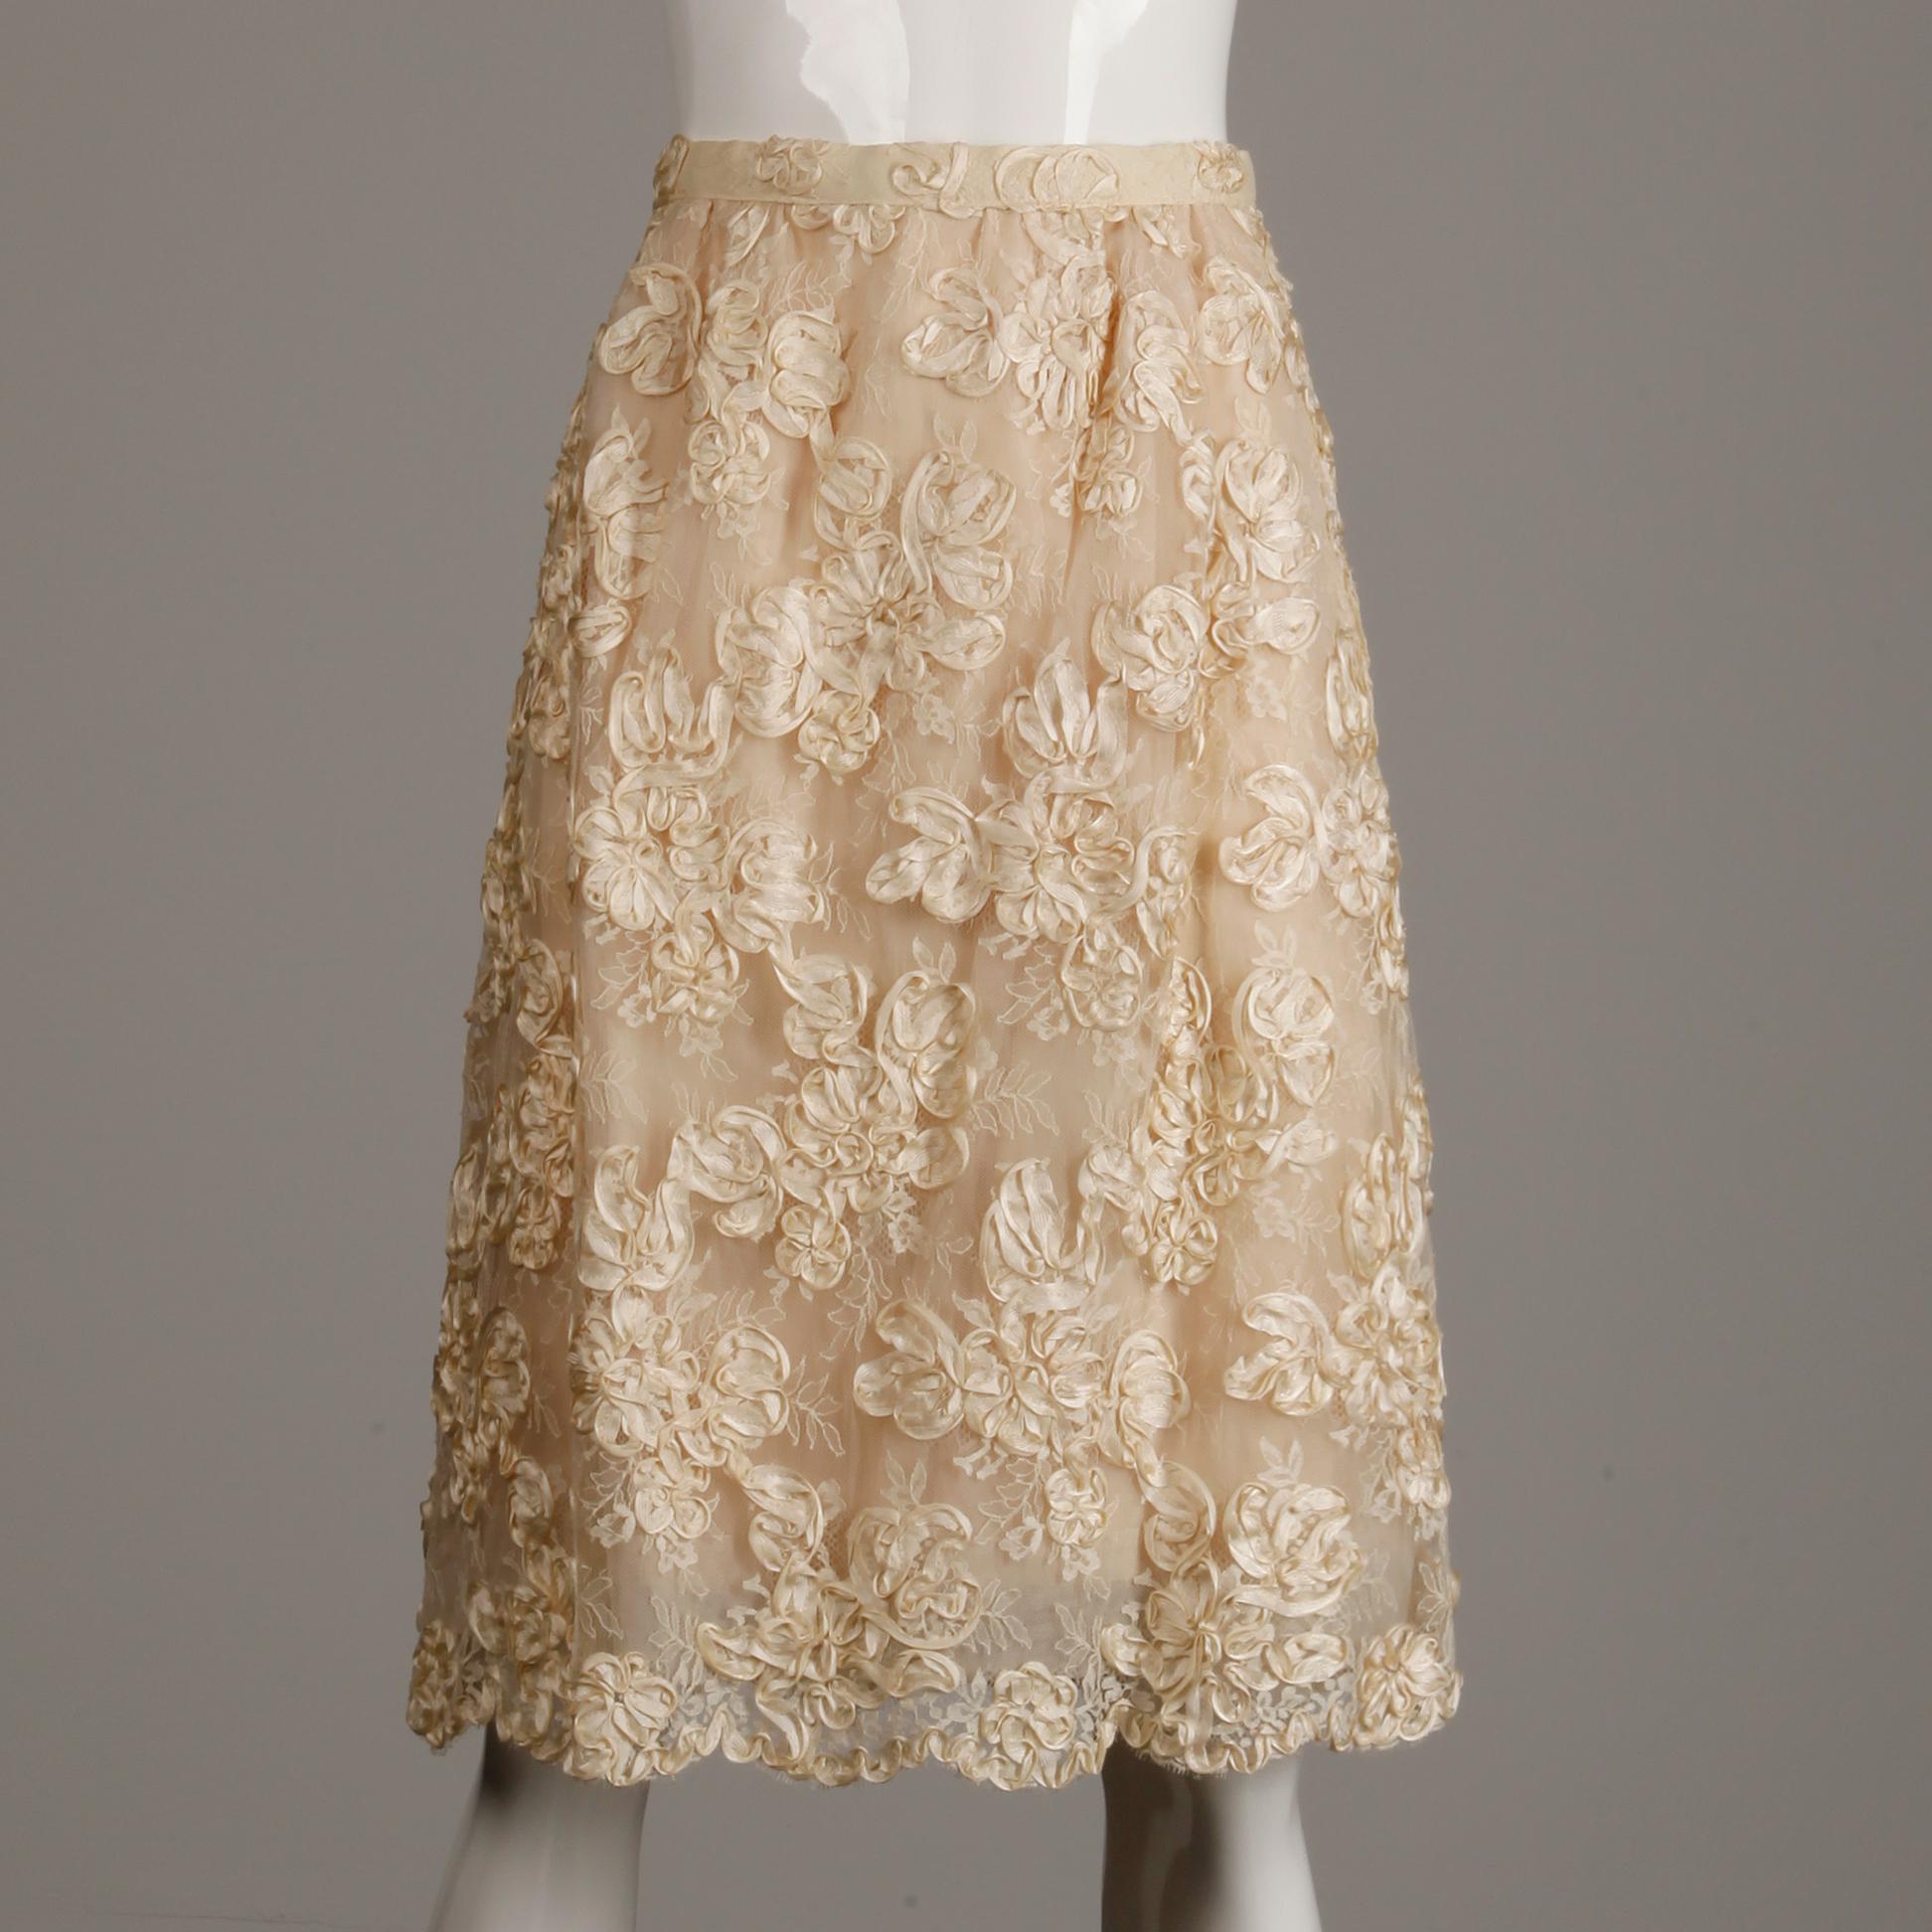 1960s Vintage Cream/ Off White Silk Soutache Lace Top/ Skirt Ensemble or Dress For Sale 1